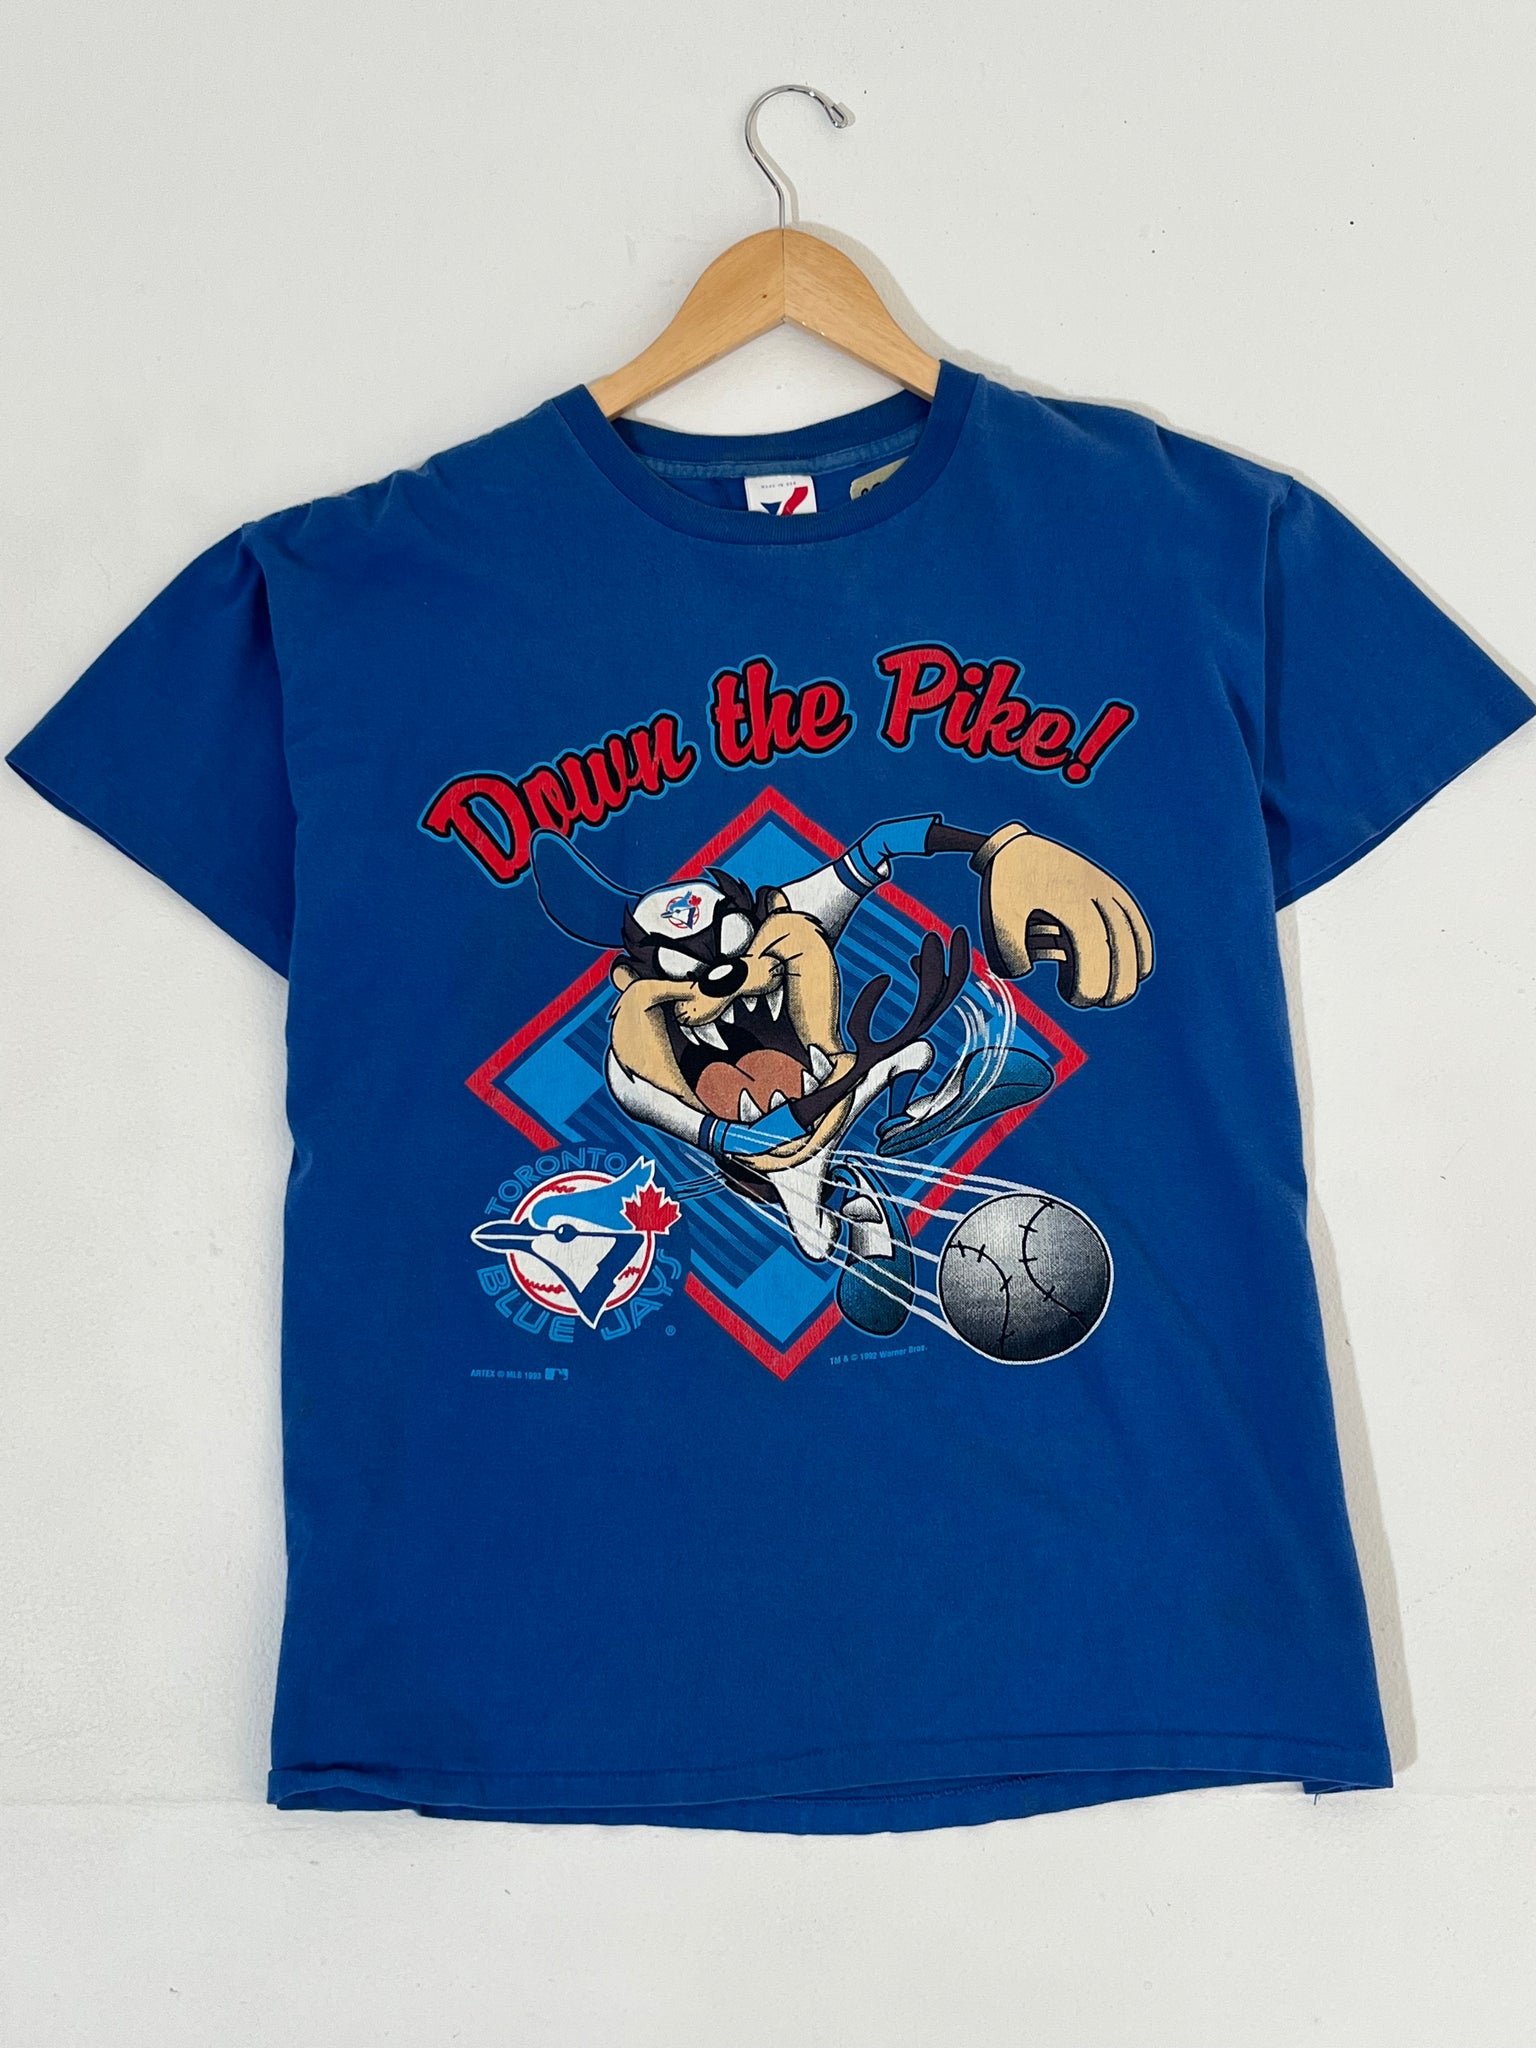 Vintage 1992 Toronto Blue Jays T-shirt 